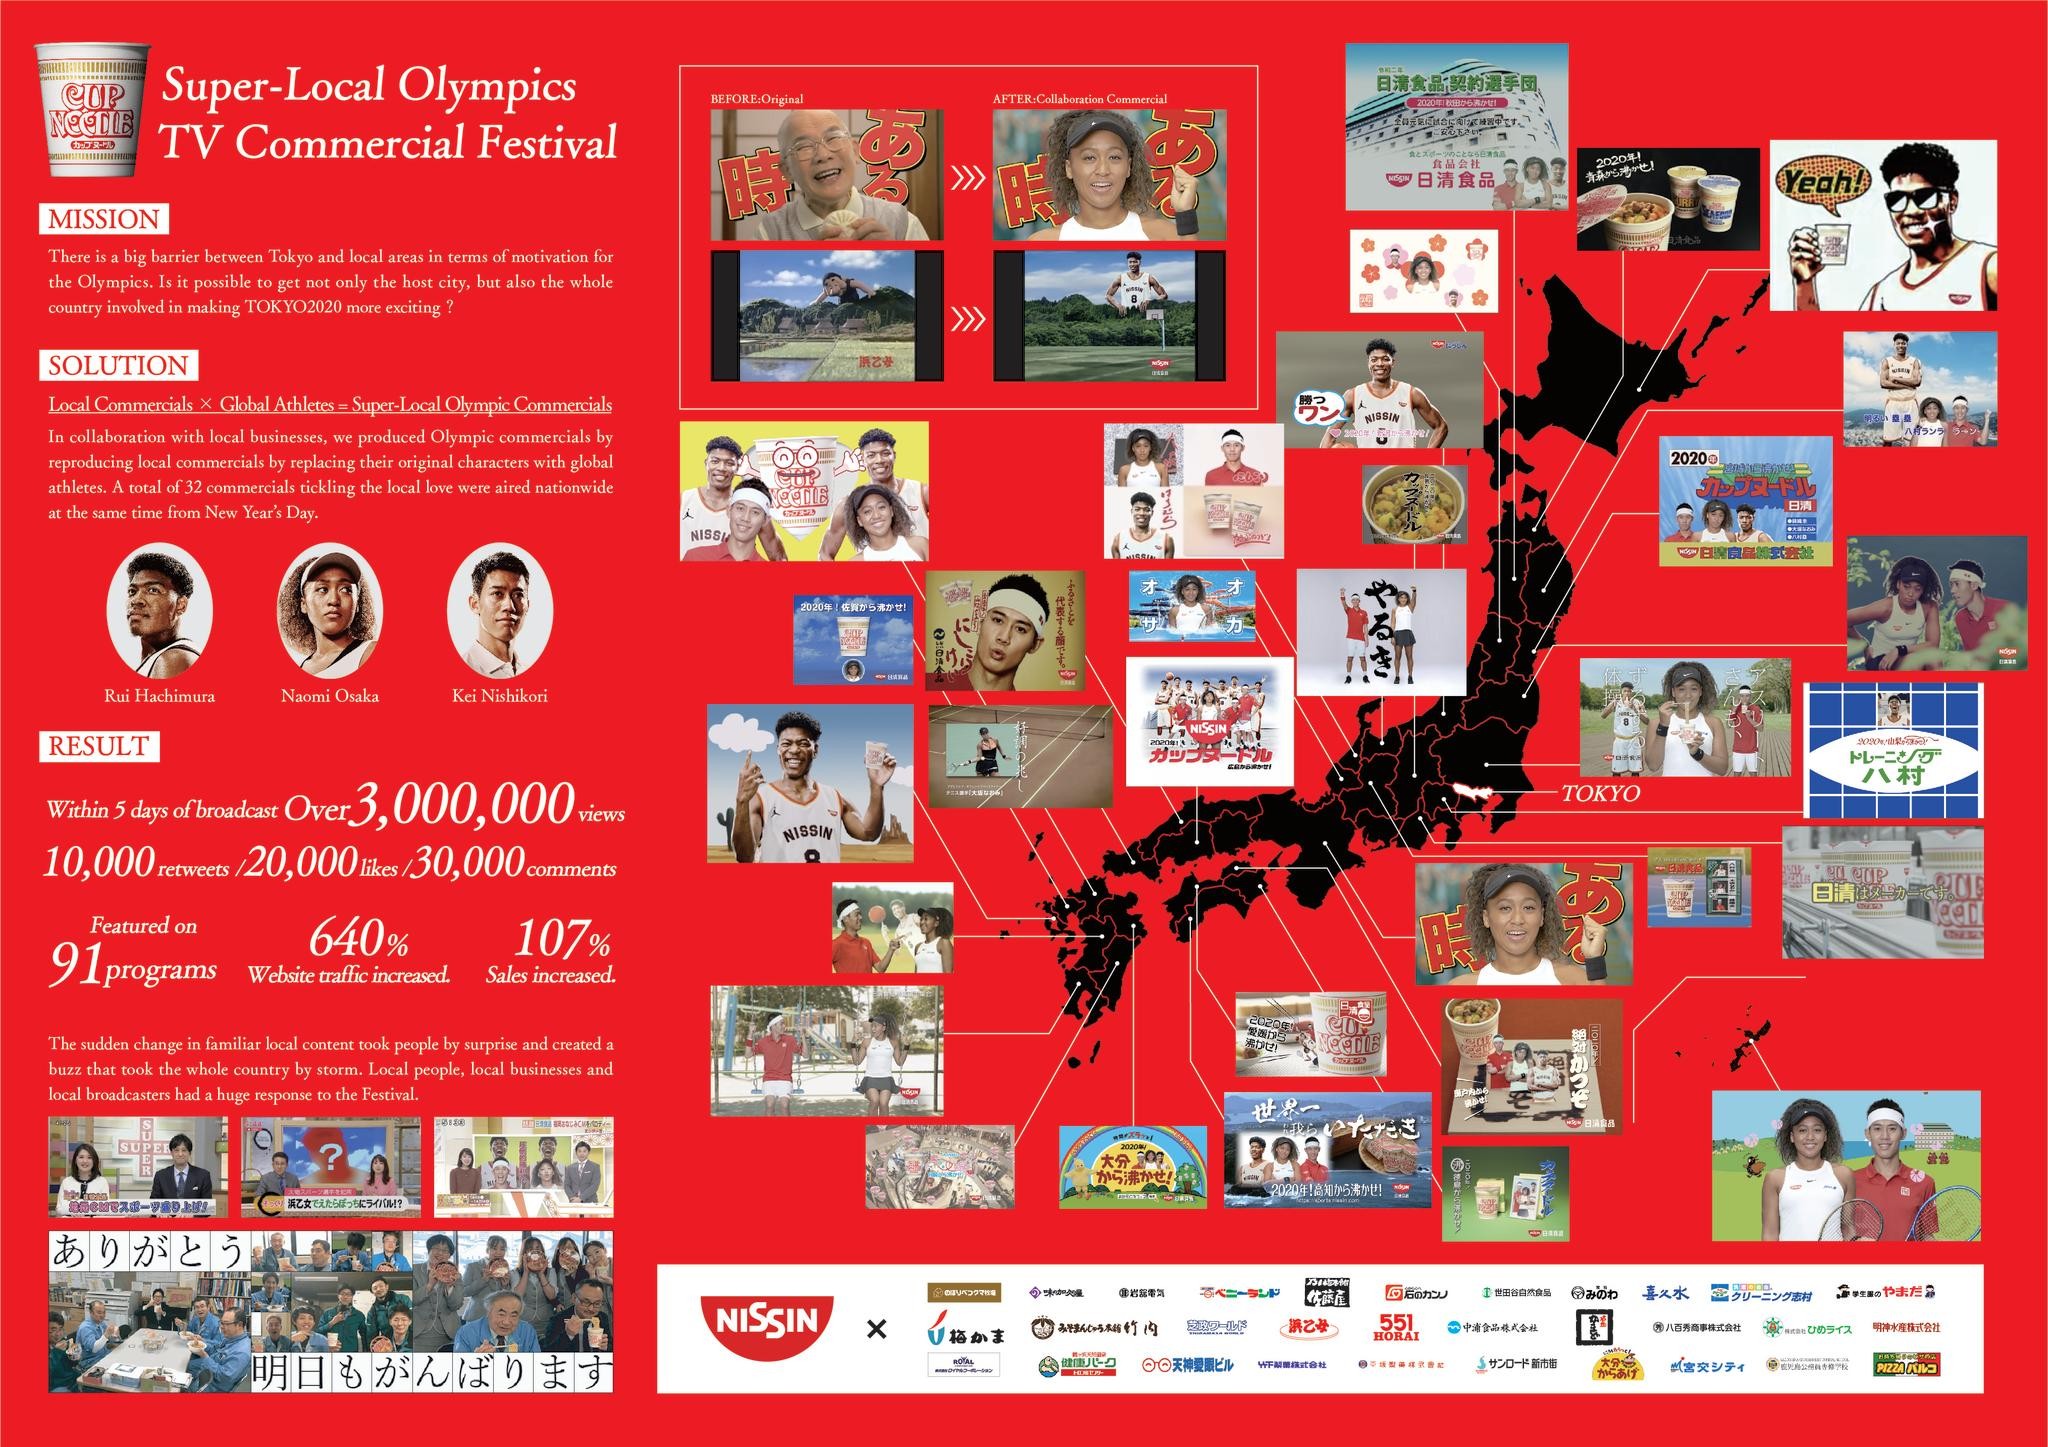 Super - Local Olympics TV Commercial Festival